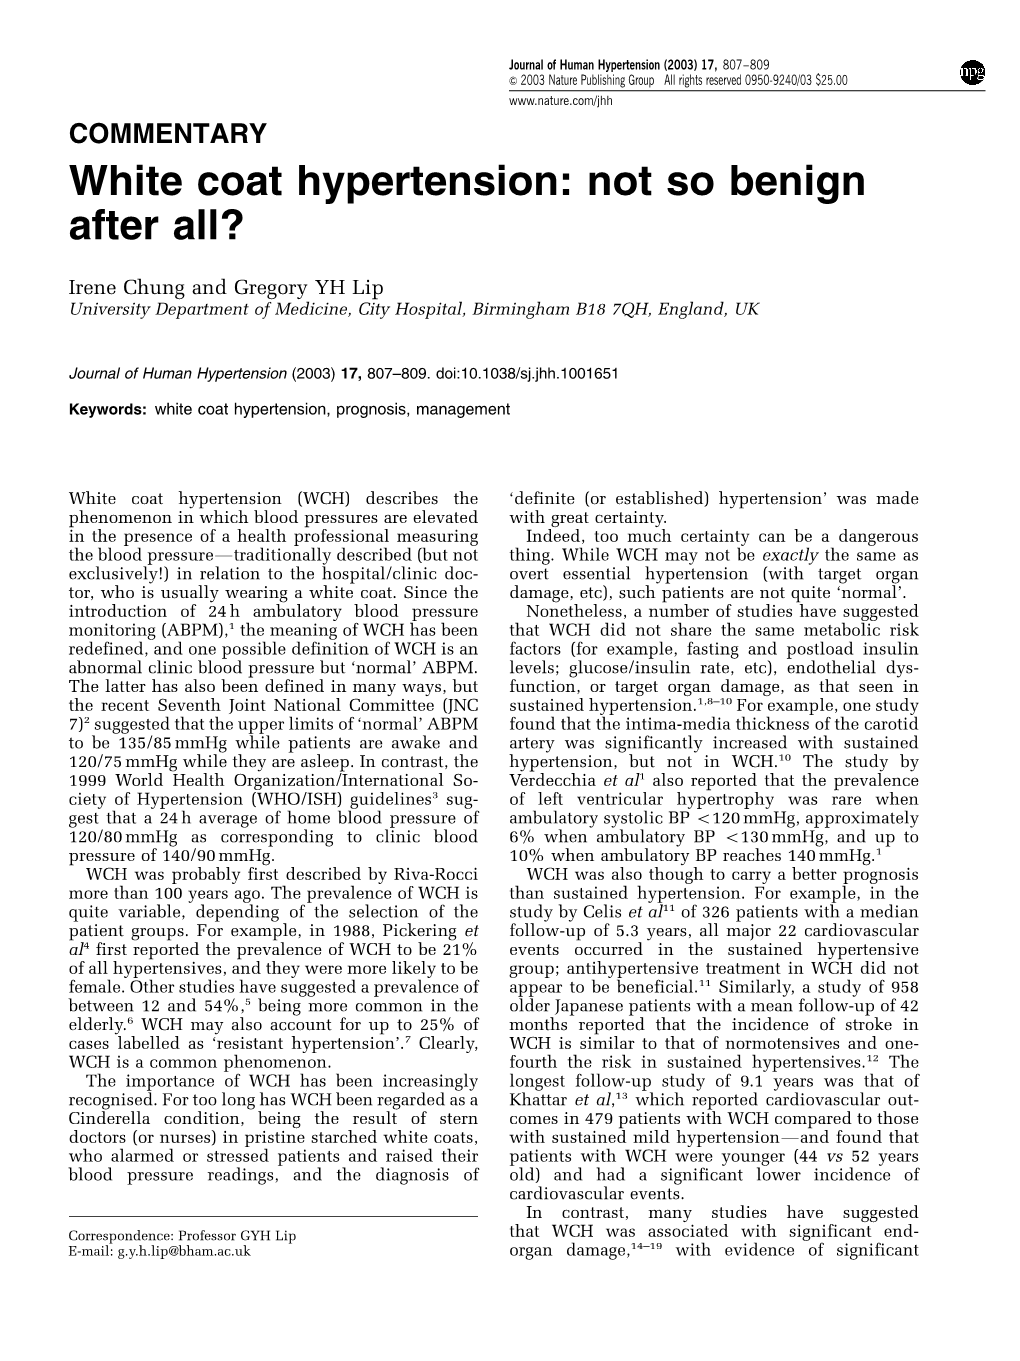 White Coat Hypertension: Not So Benign After All?